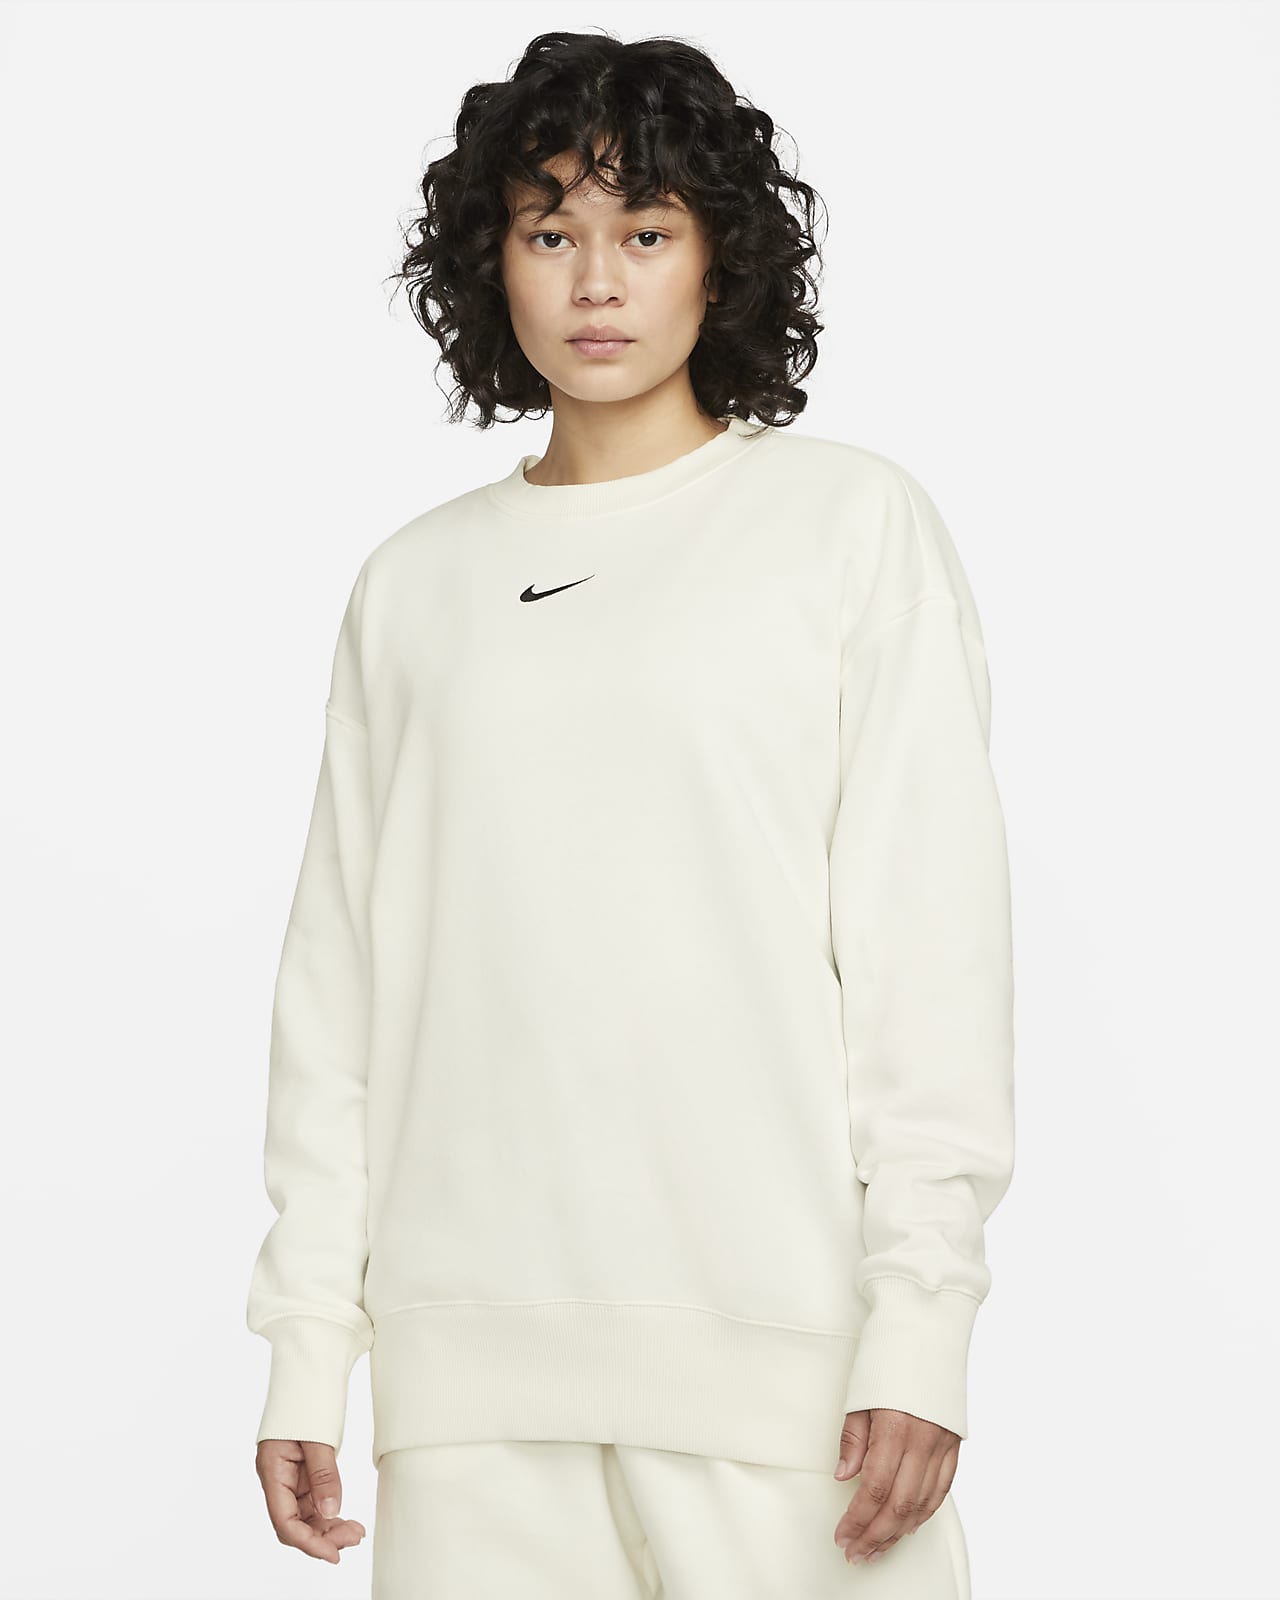 Nike Sportswear Phoenix Fleece Oversize-Damen-Sweatshirt mit Rundhalsausschnitt